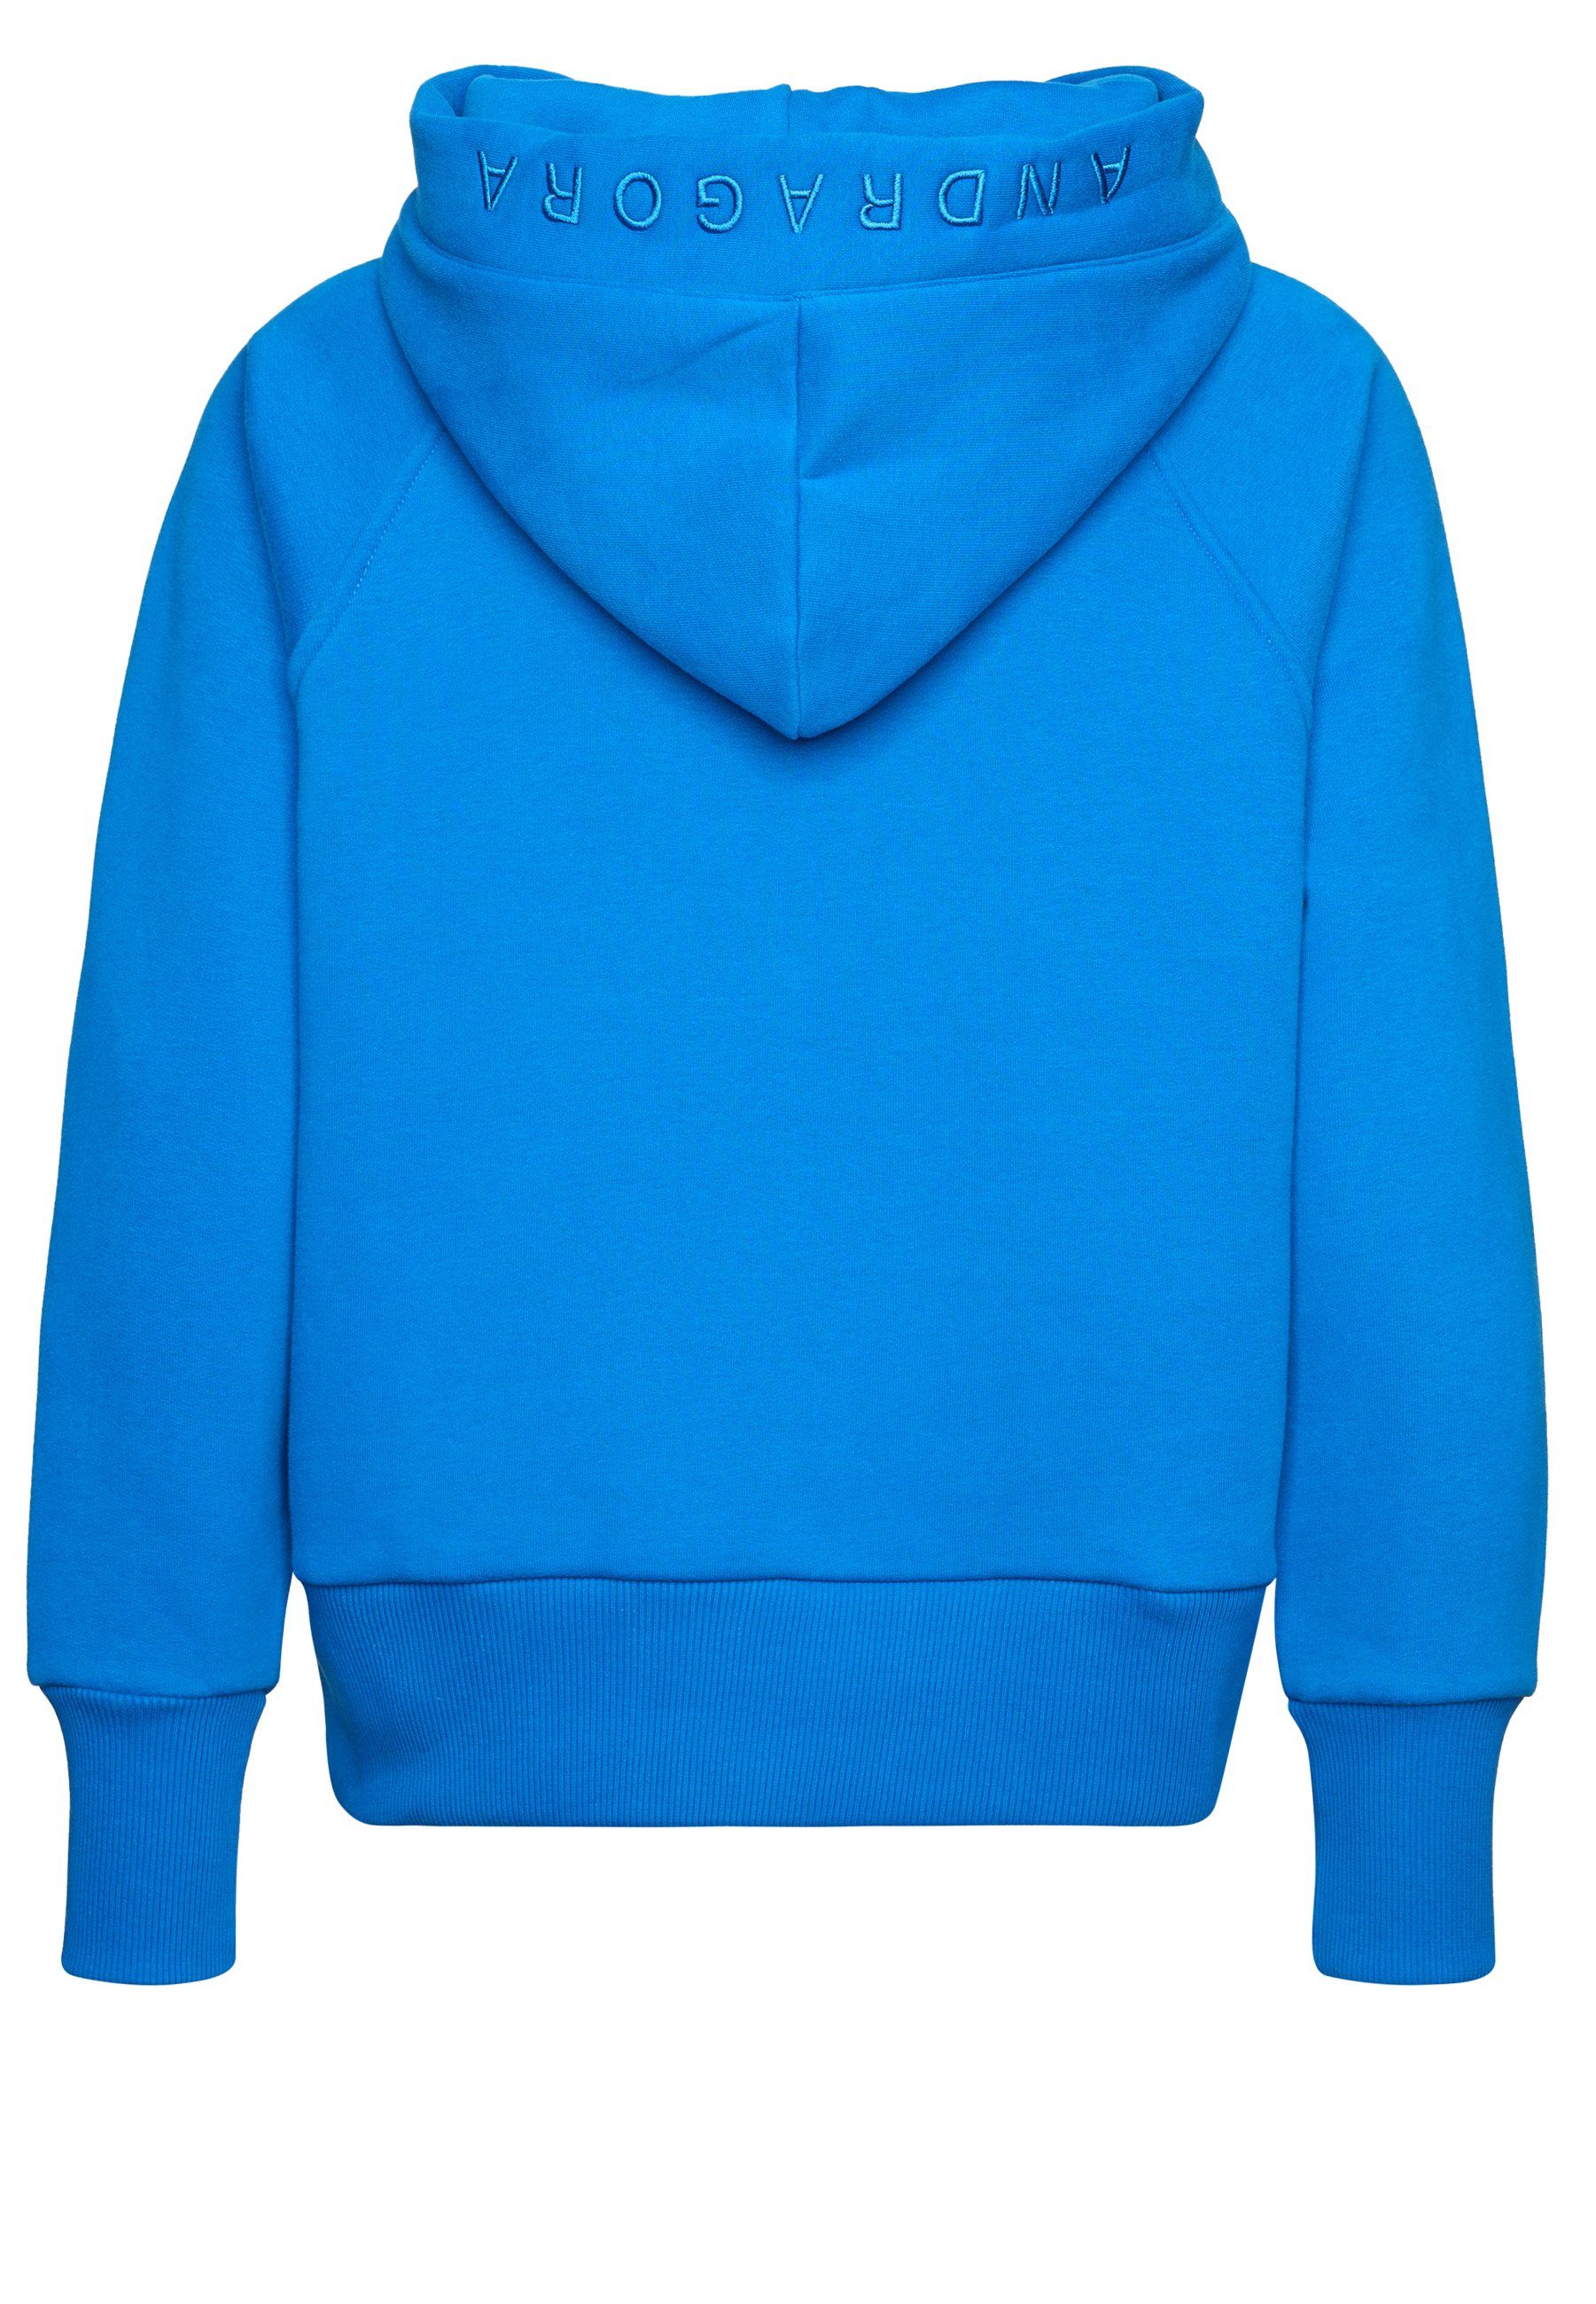 klassischen dunkelblau Decay Kapuzensweatshirt Design im